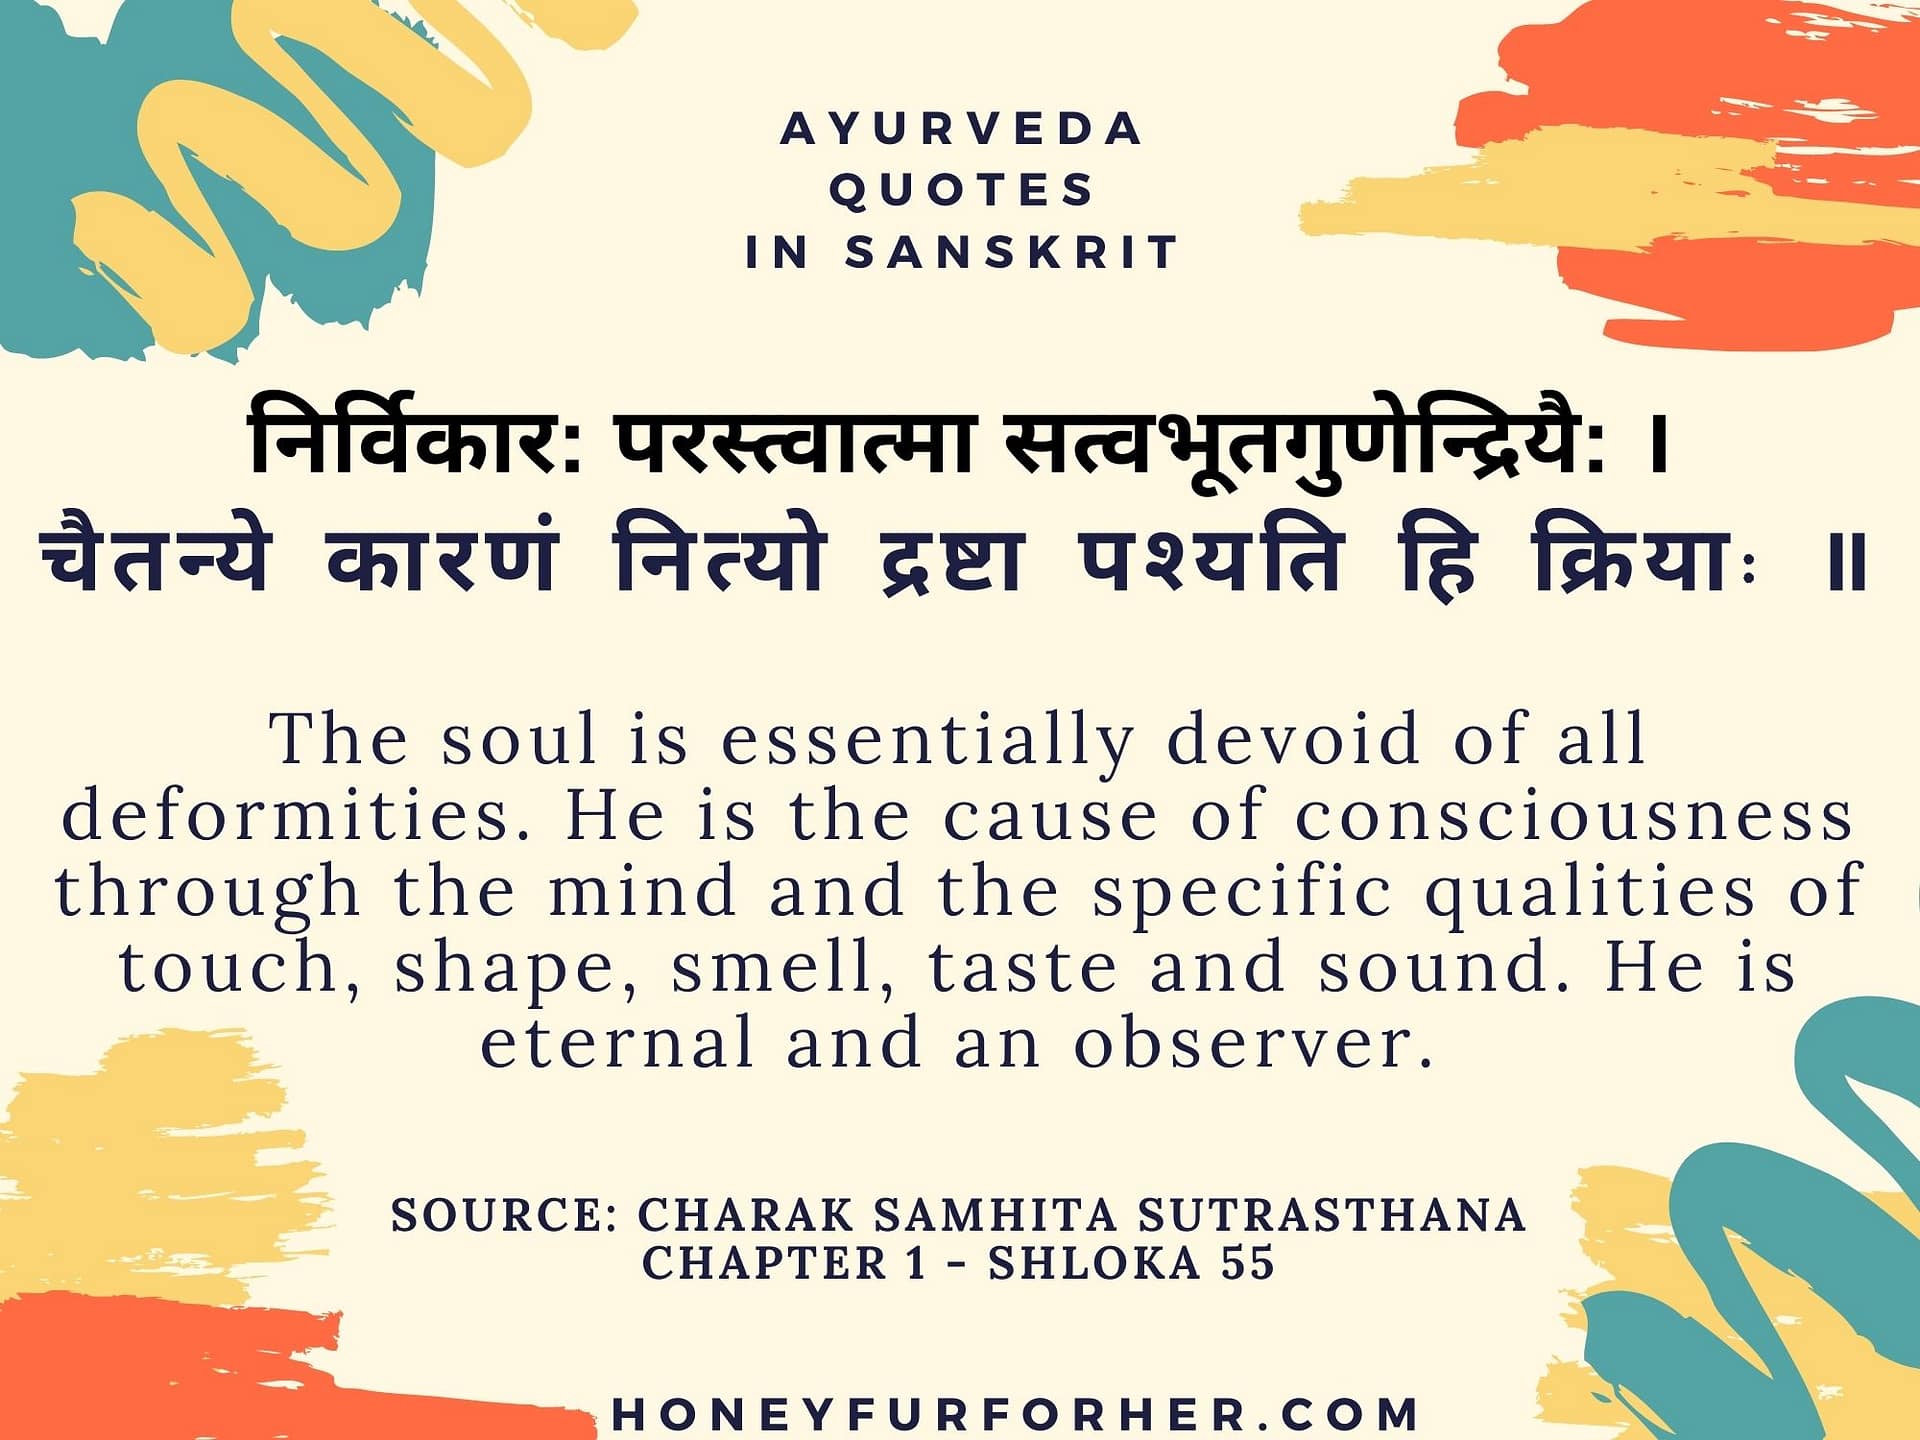 27 Ayurveda Quotes / Shlokas In Sanskrit With English Translations